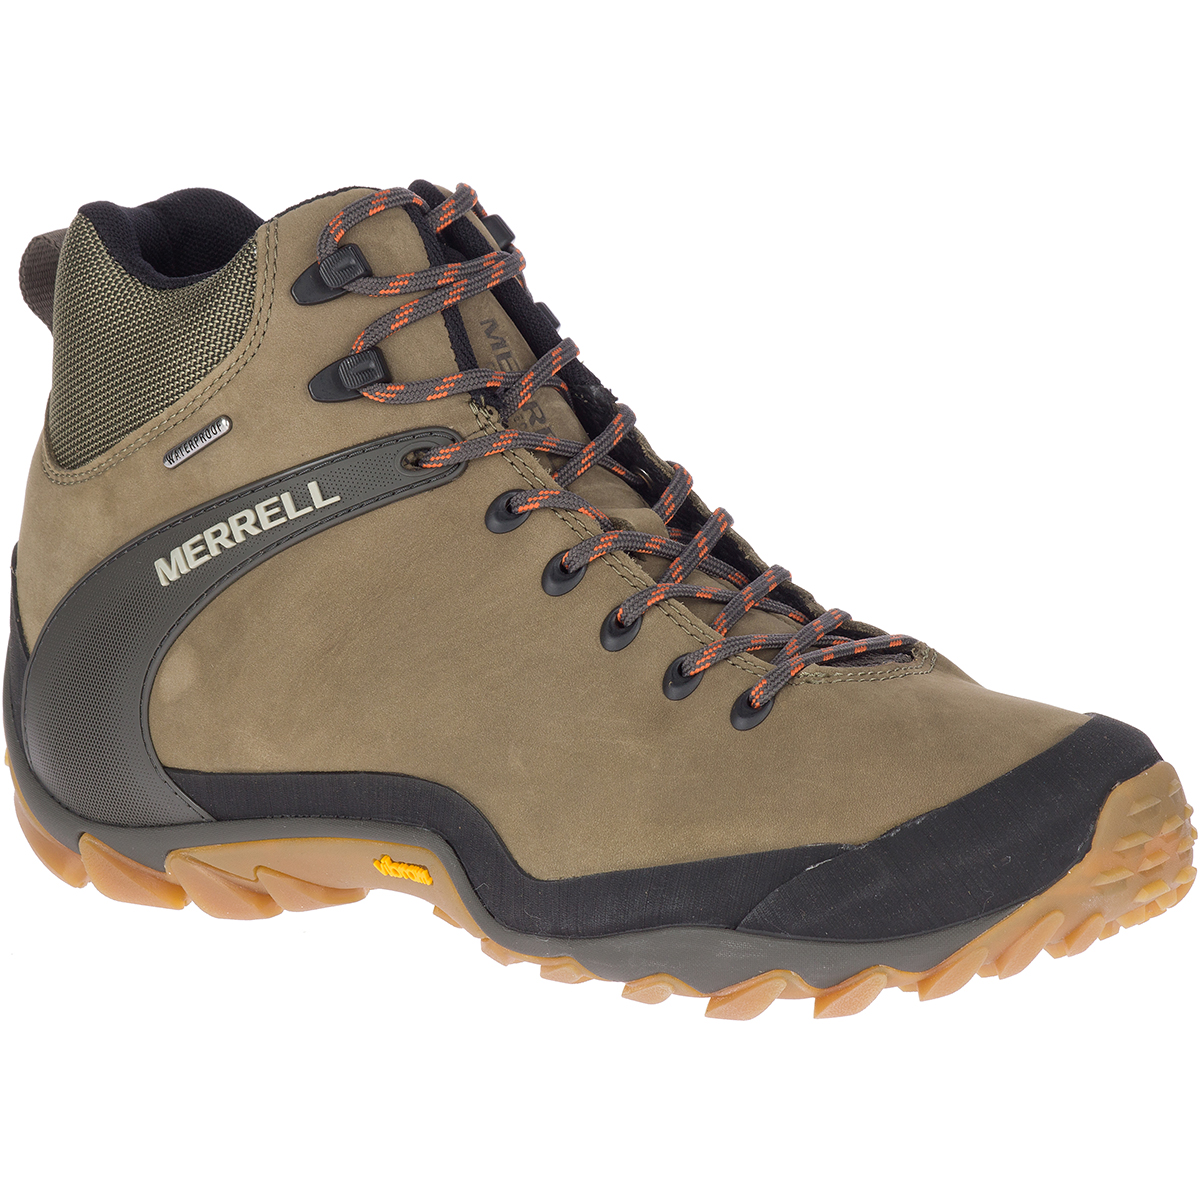 Merrell Men's Chameleon 8 Leather Mid Waterproof Hiking Shoes